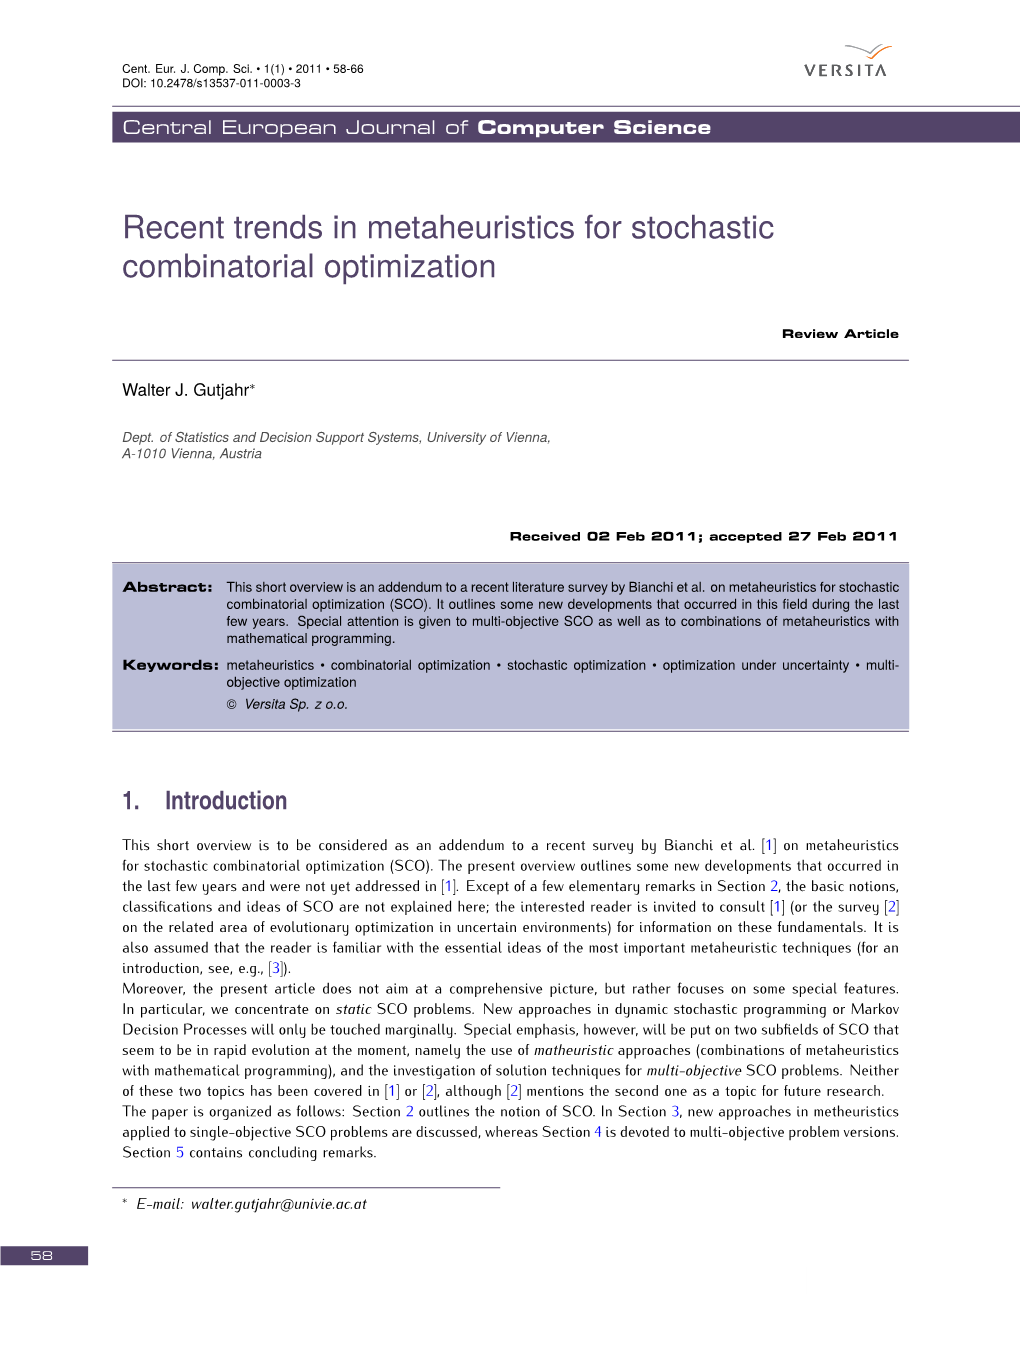 Recent Trends in Metaheuristics for Stochastic Combinatorial Optimization